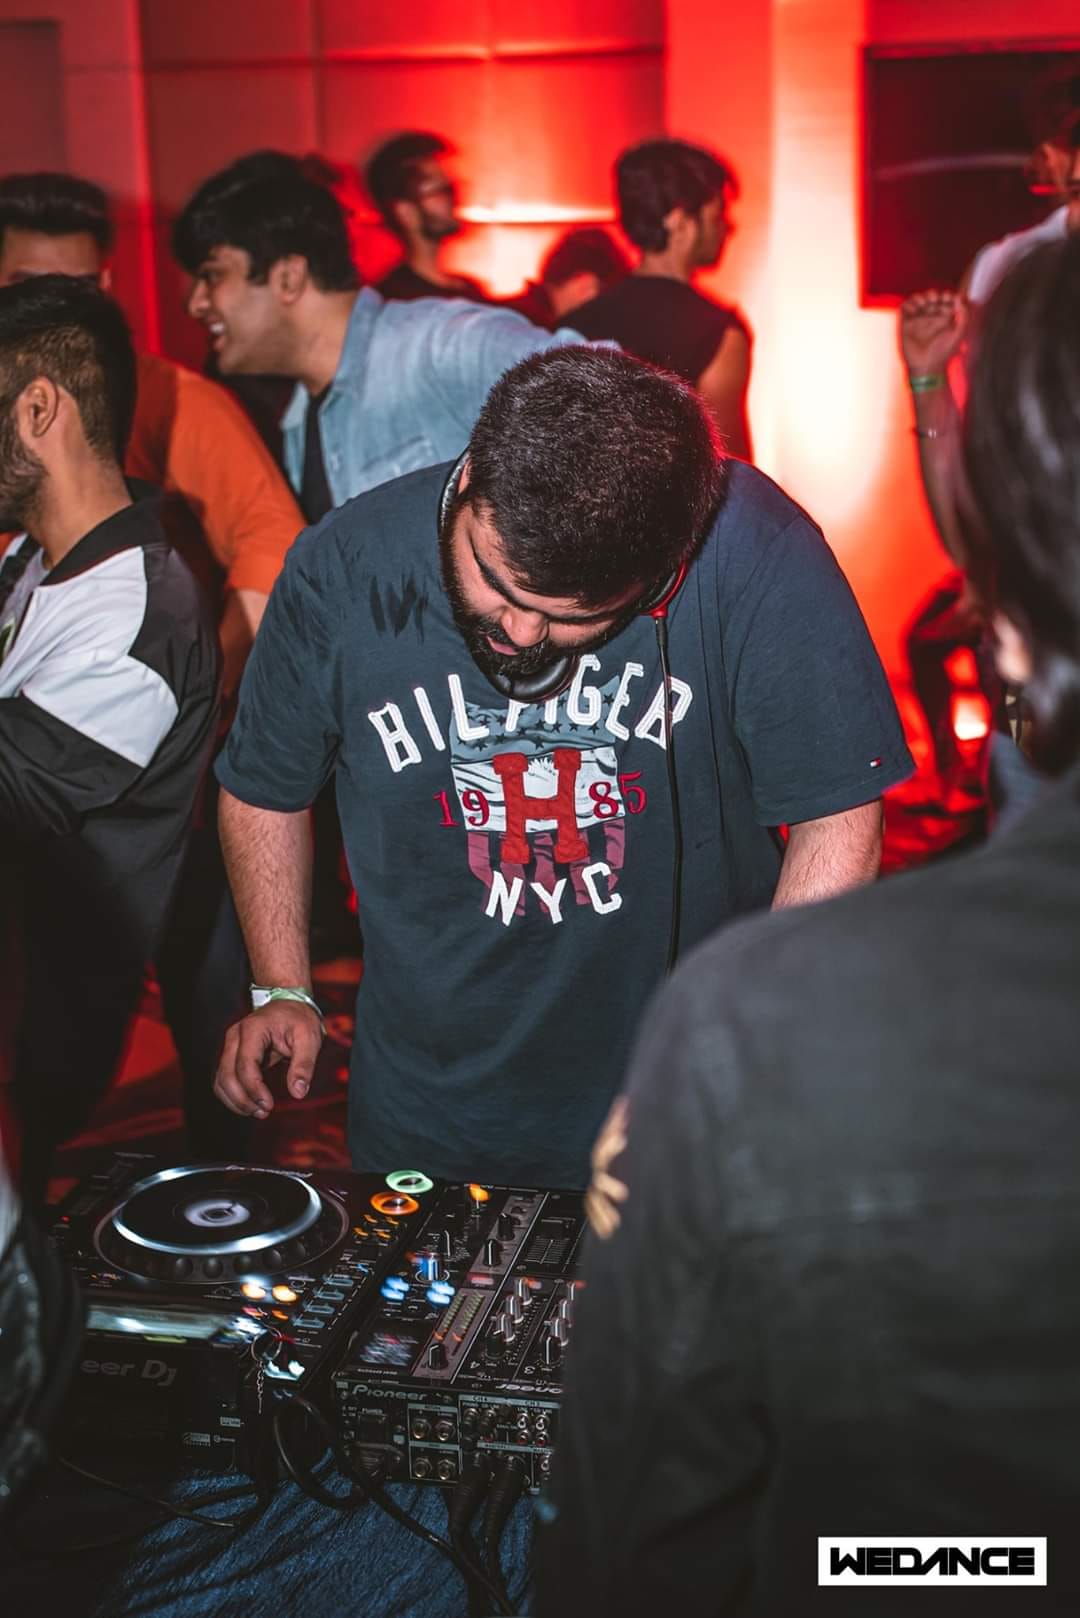 DJ Mindbass